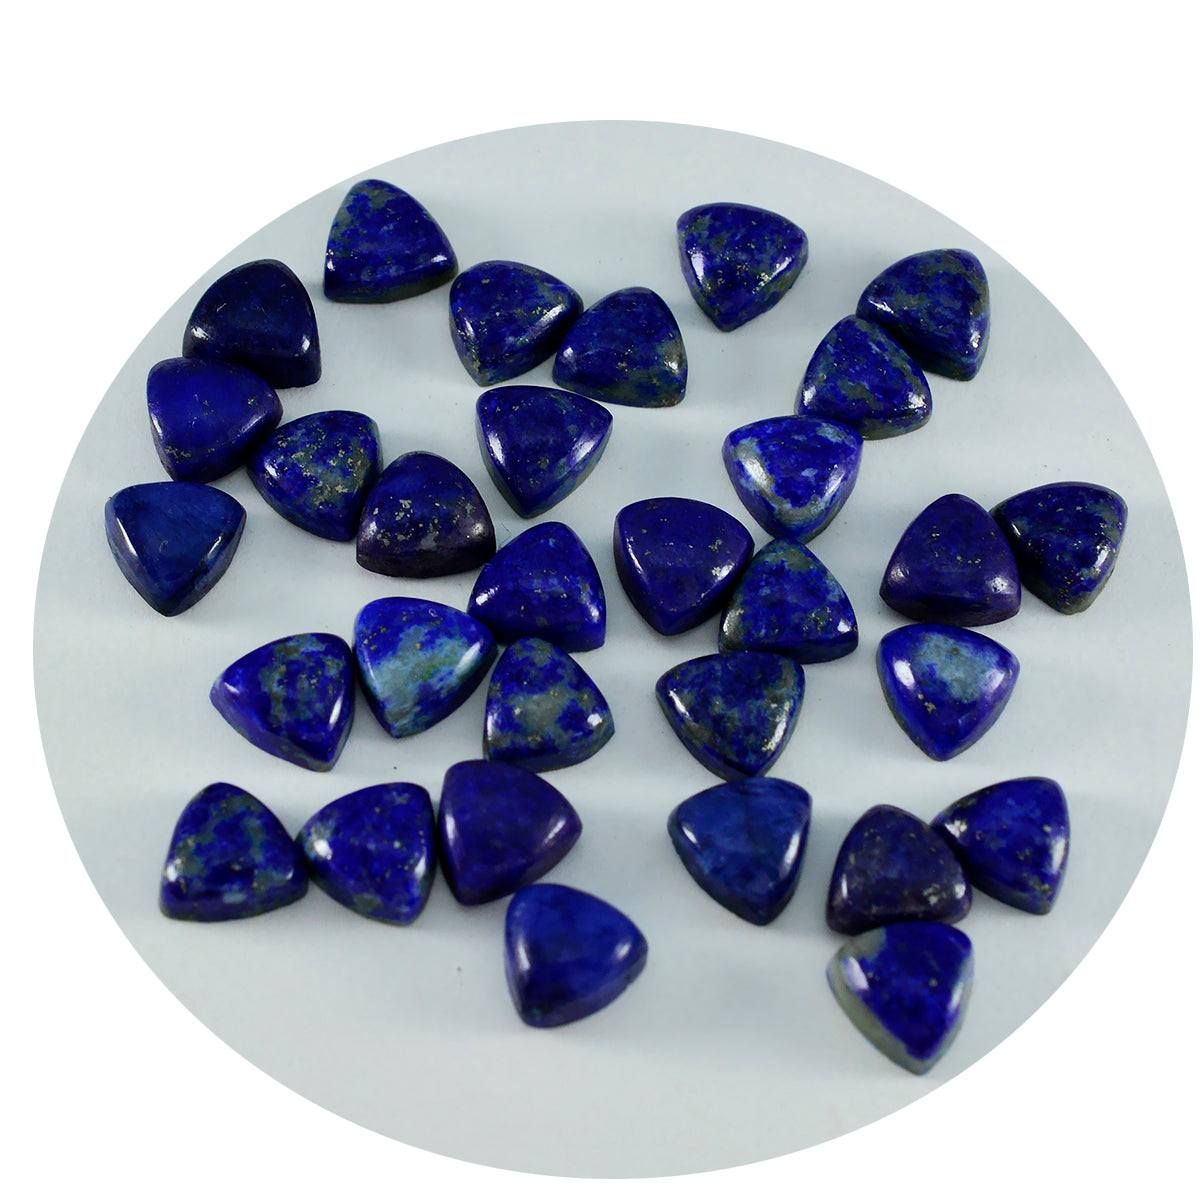 Riyogems 1PC Blue Lapis Lazuli Cabochon 4x4 mm Trillion Shape Good Quality Gemstone